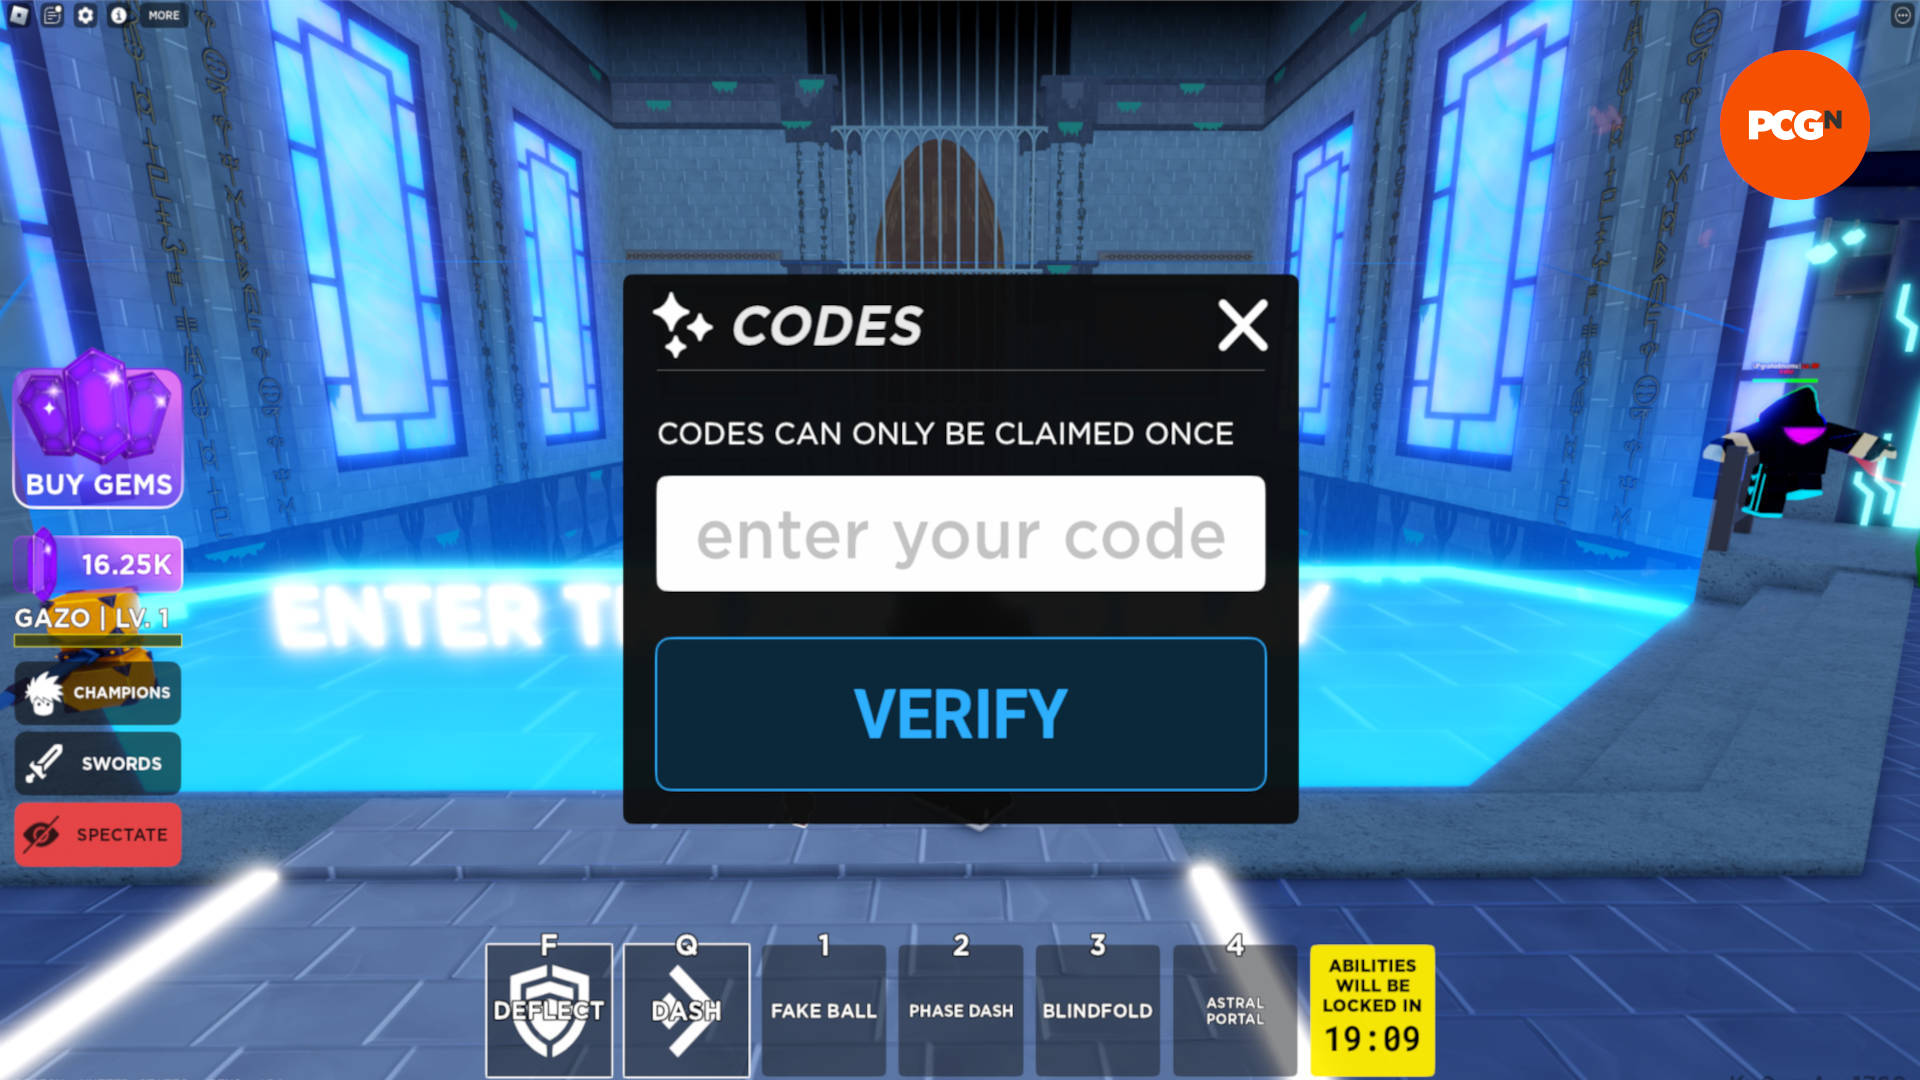 Blue Locked League codes